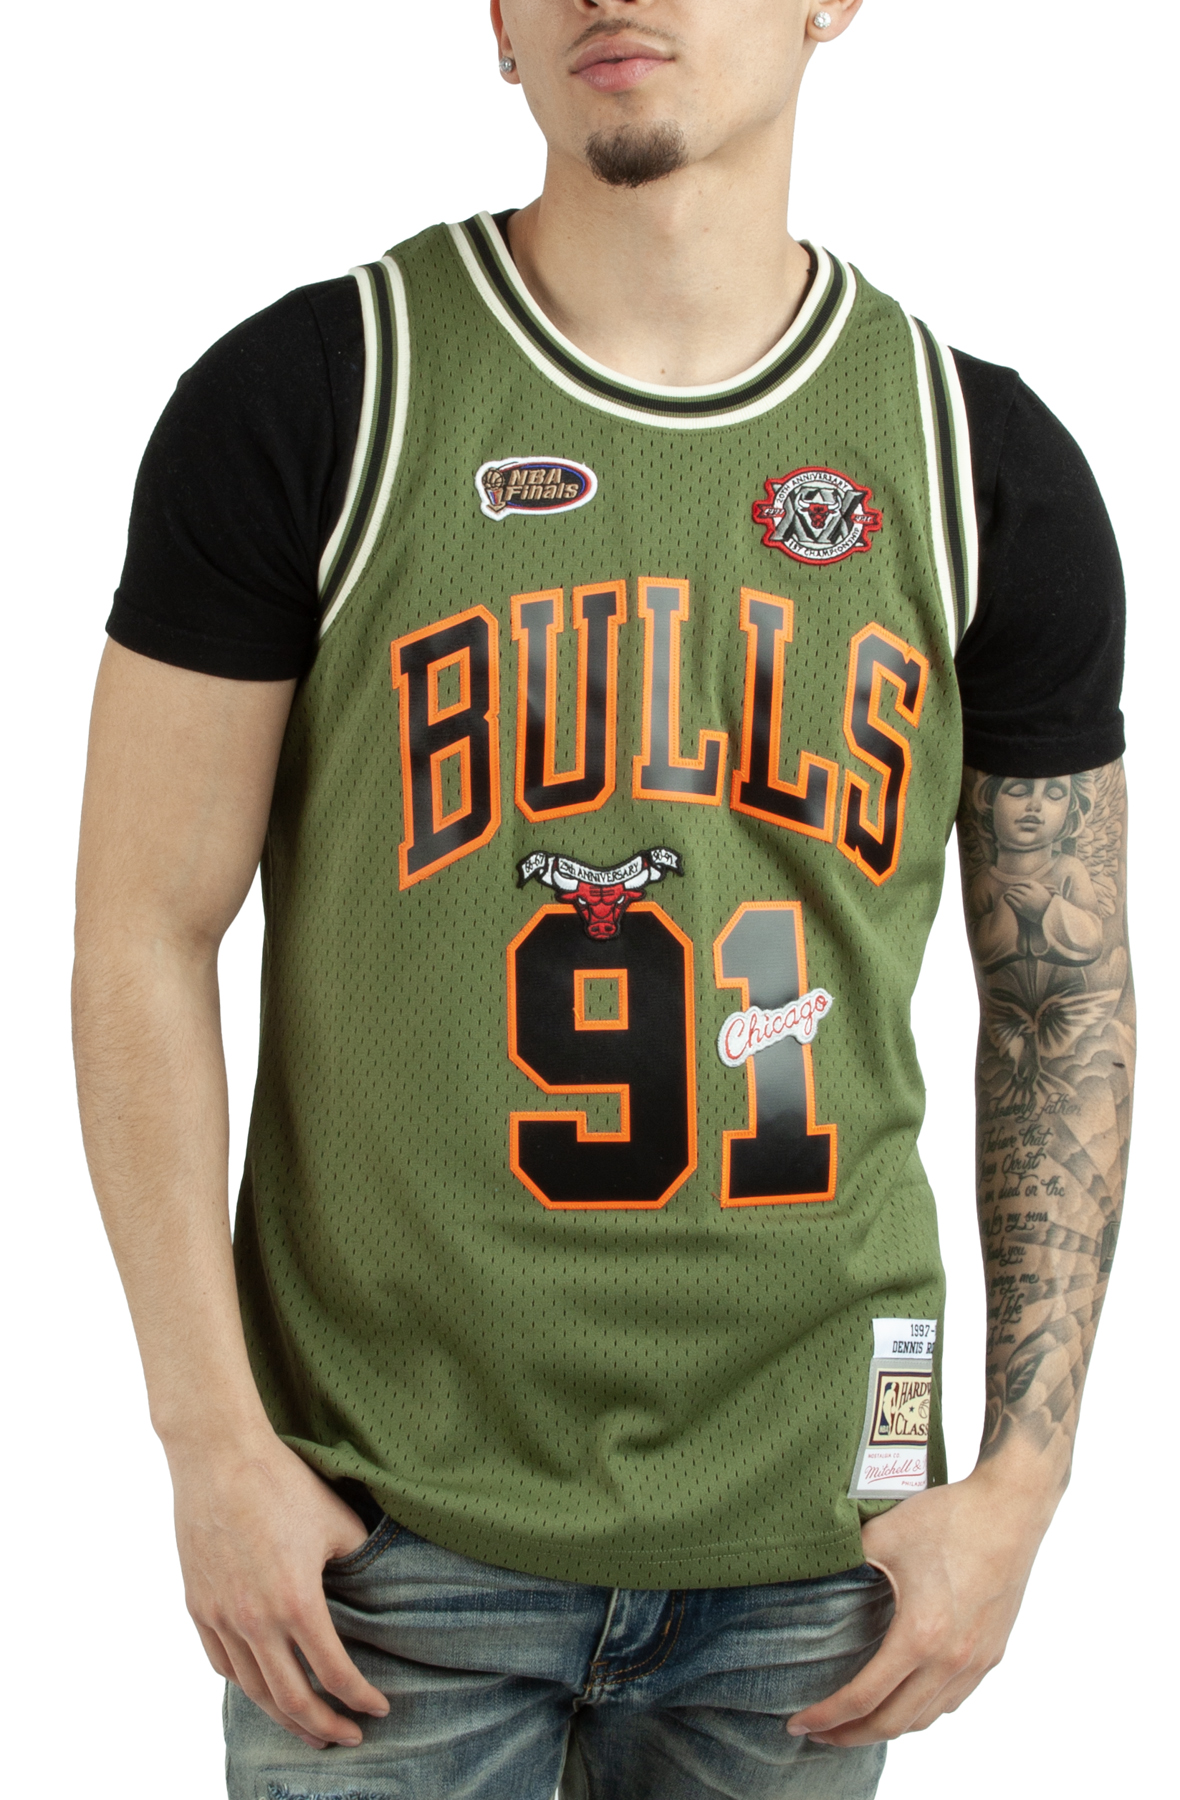 Chicago Bulls Green Jersey